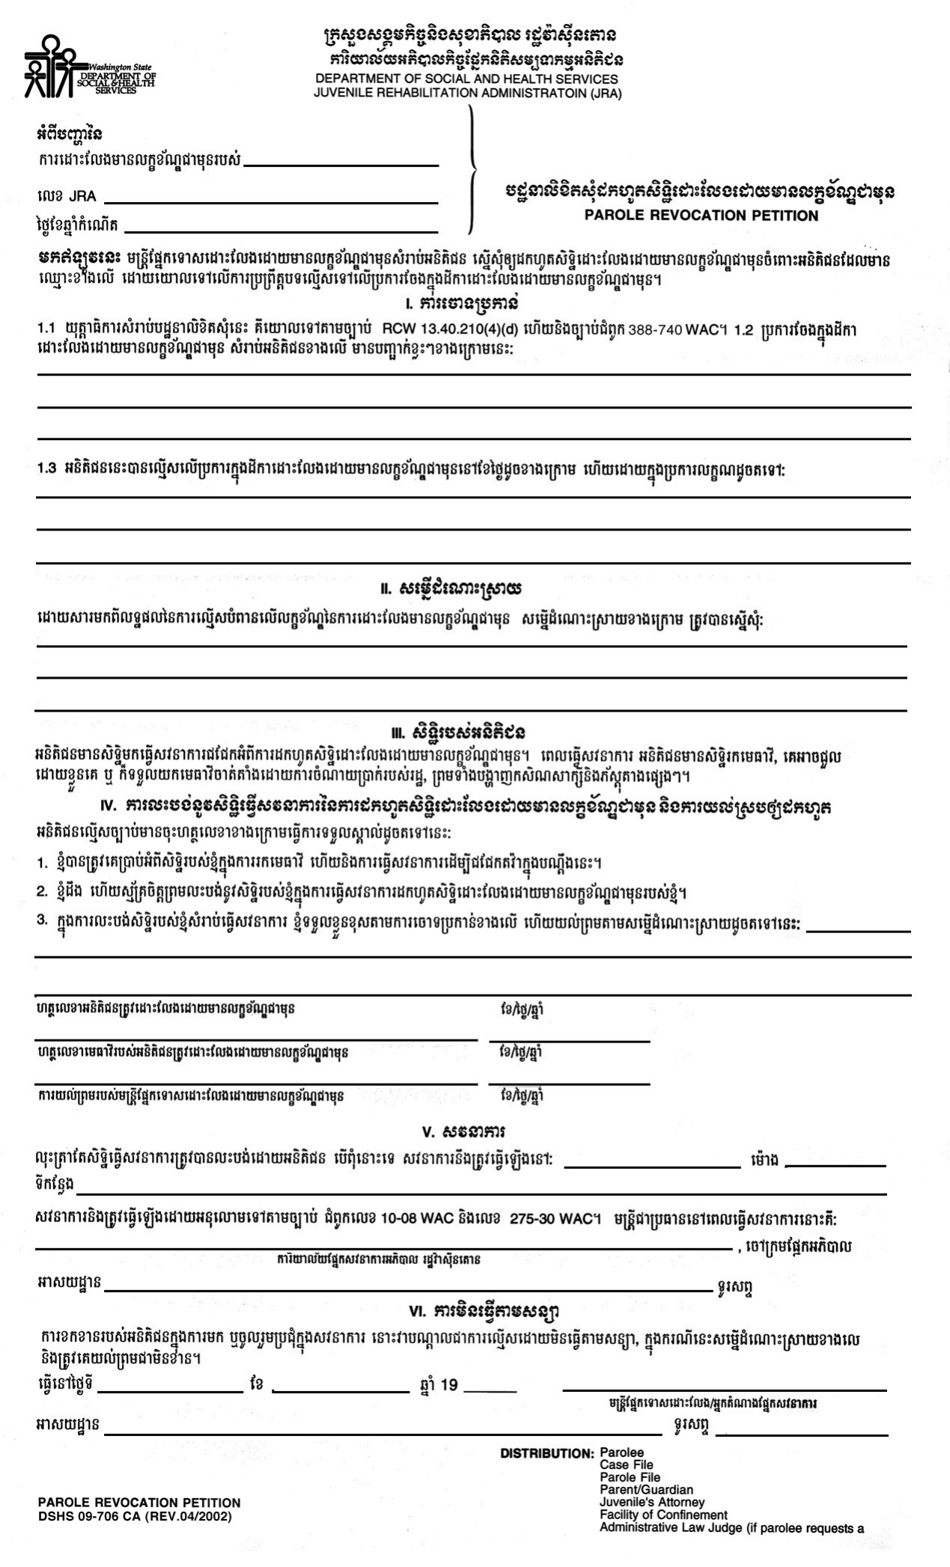 DSHS Form 09-706 Parole Revocation Petition (Juvenile Rehabilitation Administration) - Washington (Cambodian), Page 1